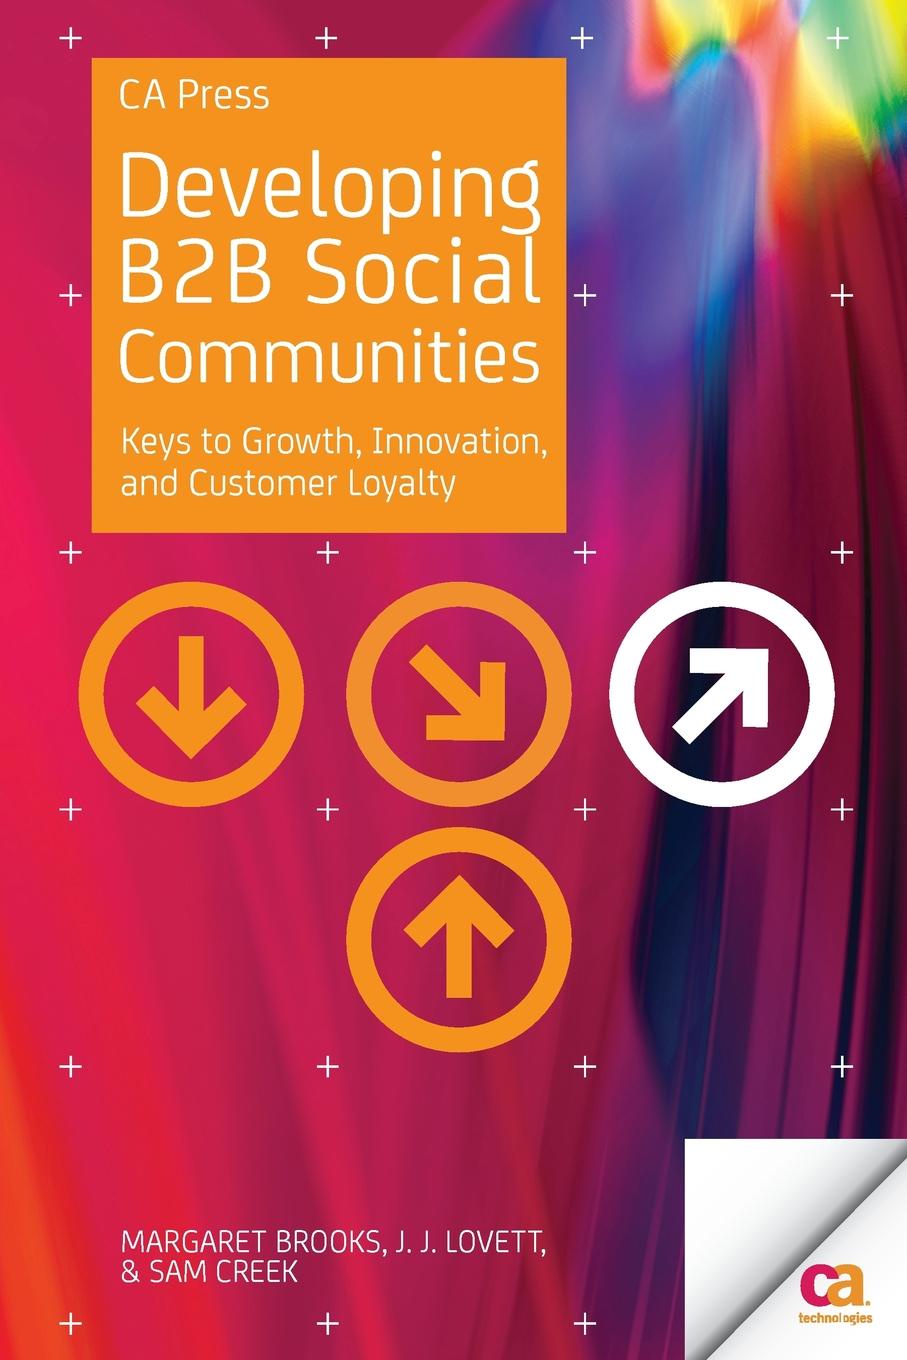 Developing B2B Social Communities. Keys to Growth, Innovation, and Customer Loyalty